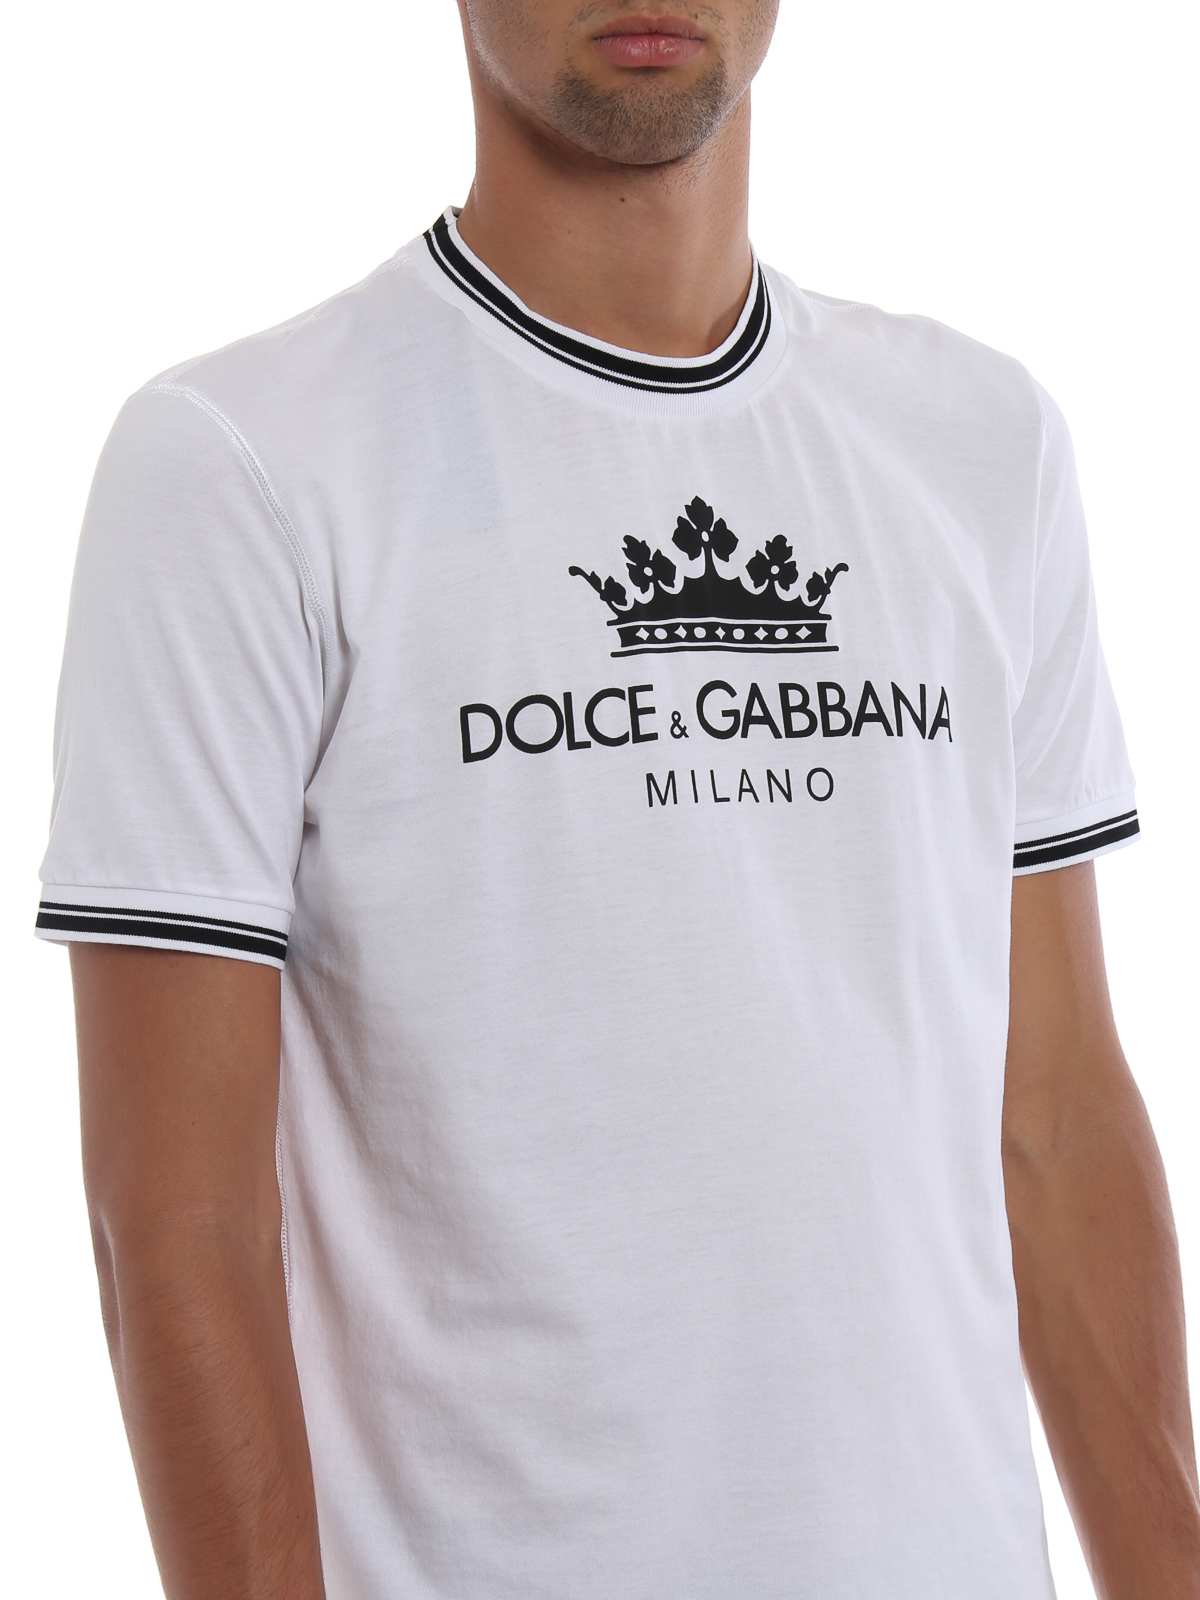 Camisetas & Gabbana - Camiseta - G8IR4TFU7EQW0800